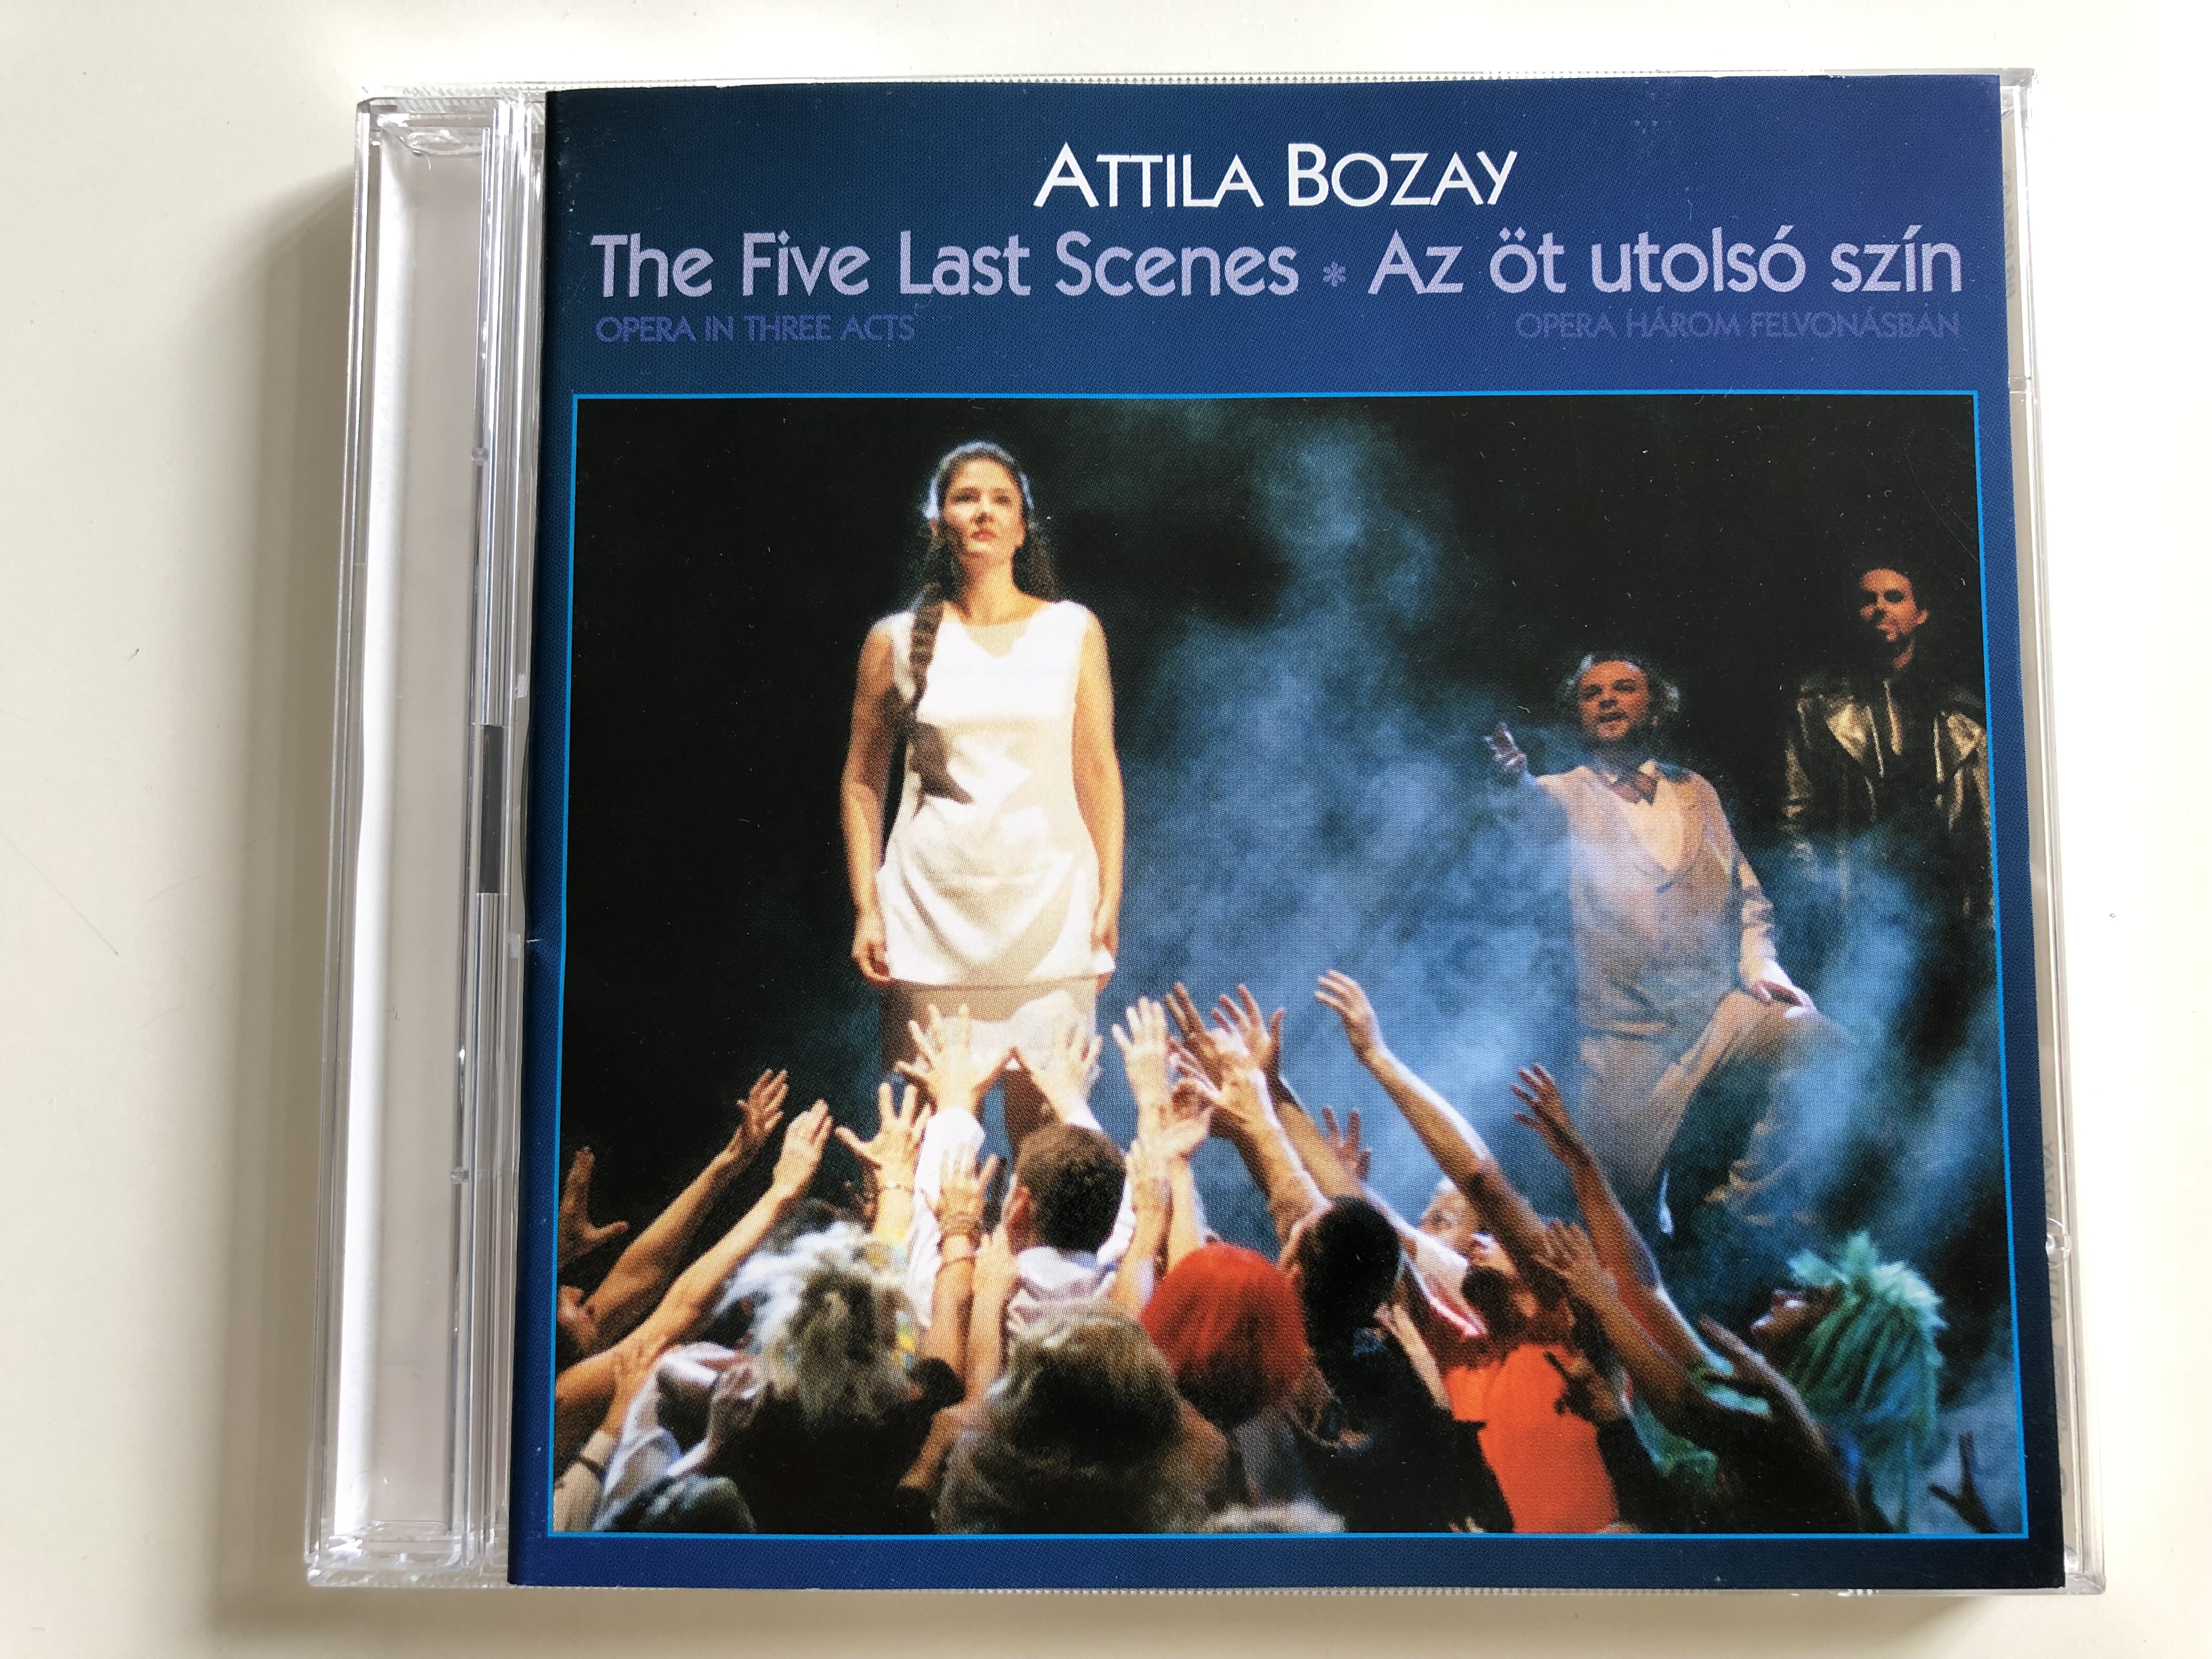 attila-bozay-the-five-last-scenes-opera-in-3-acts-az-t-utols-sz-n-opera-h-rom-felvon-sban-2x-audio-cd-2003-based-on-the-tragedy-of-man-by-imre-mad-ch-br0254-0255-1-.jpg